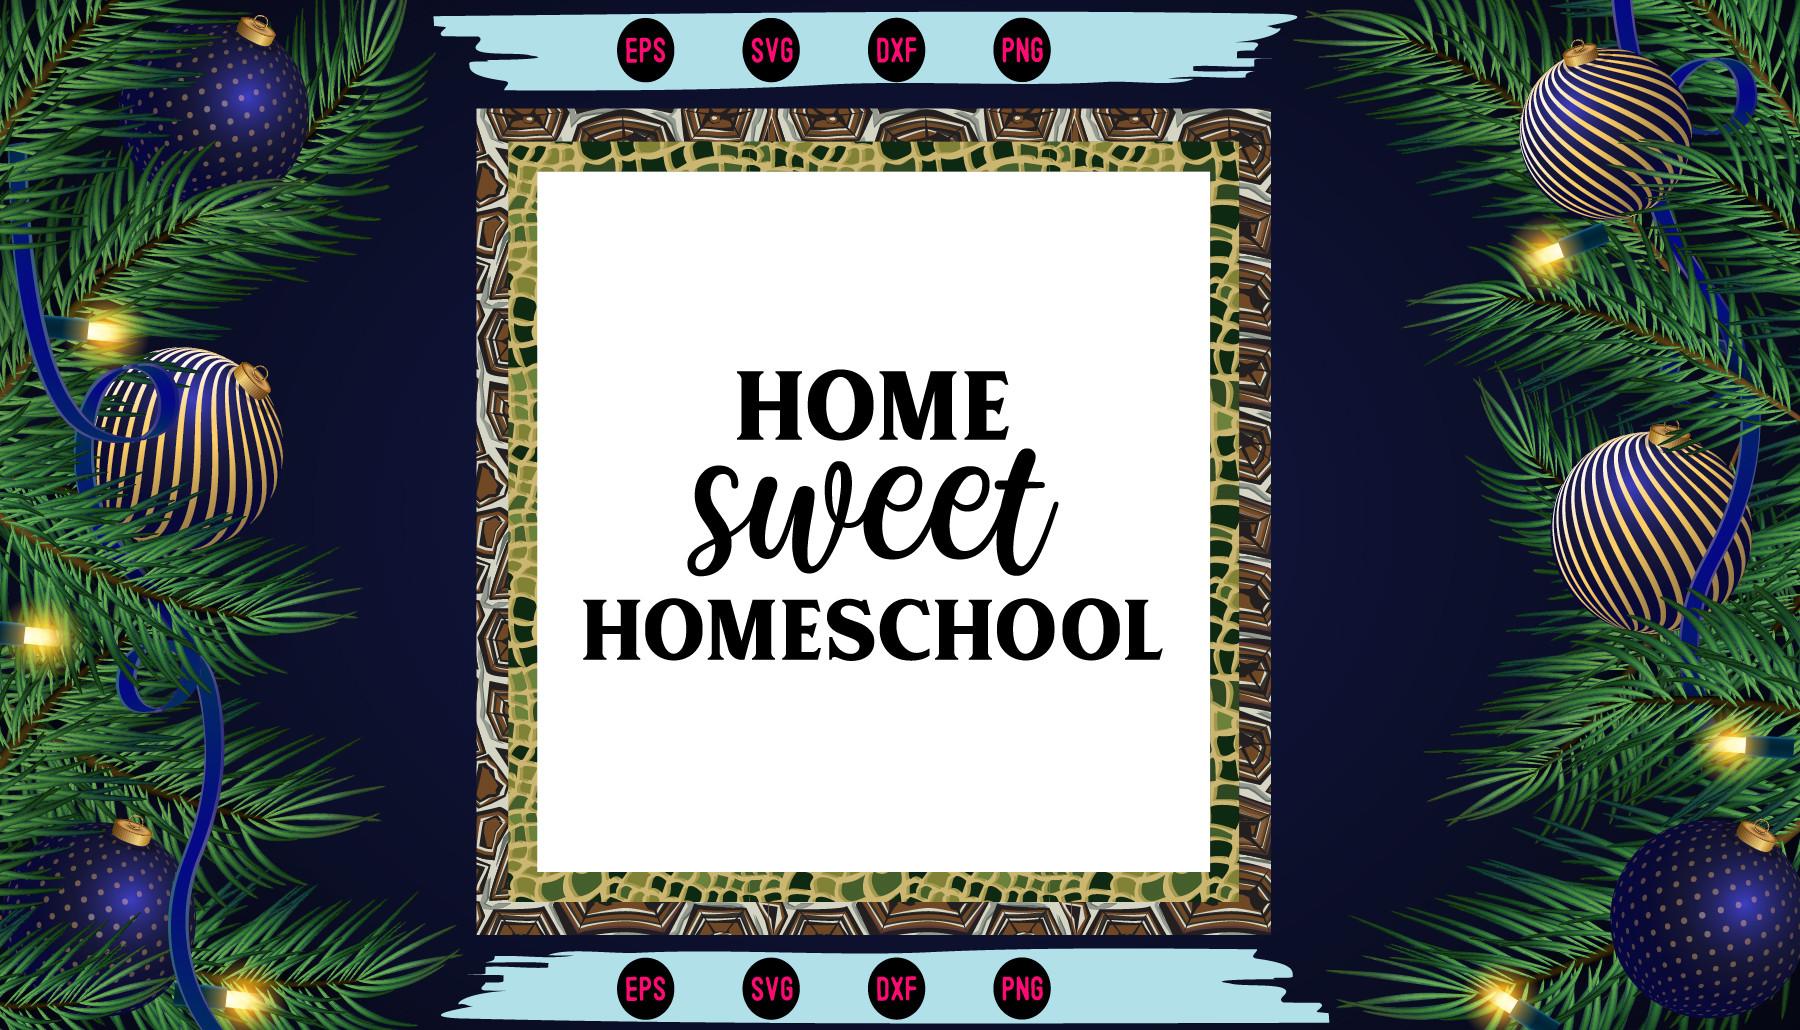 Home Sweet Homeschool